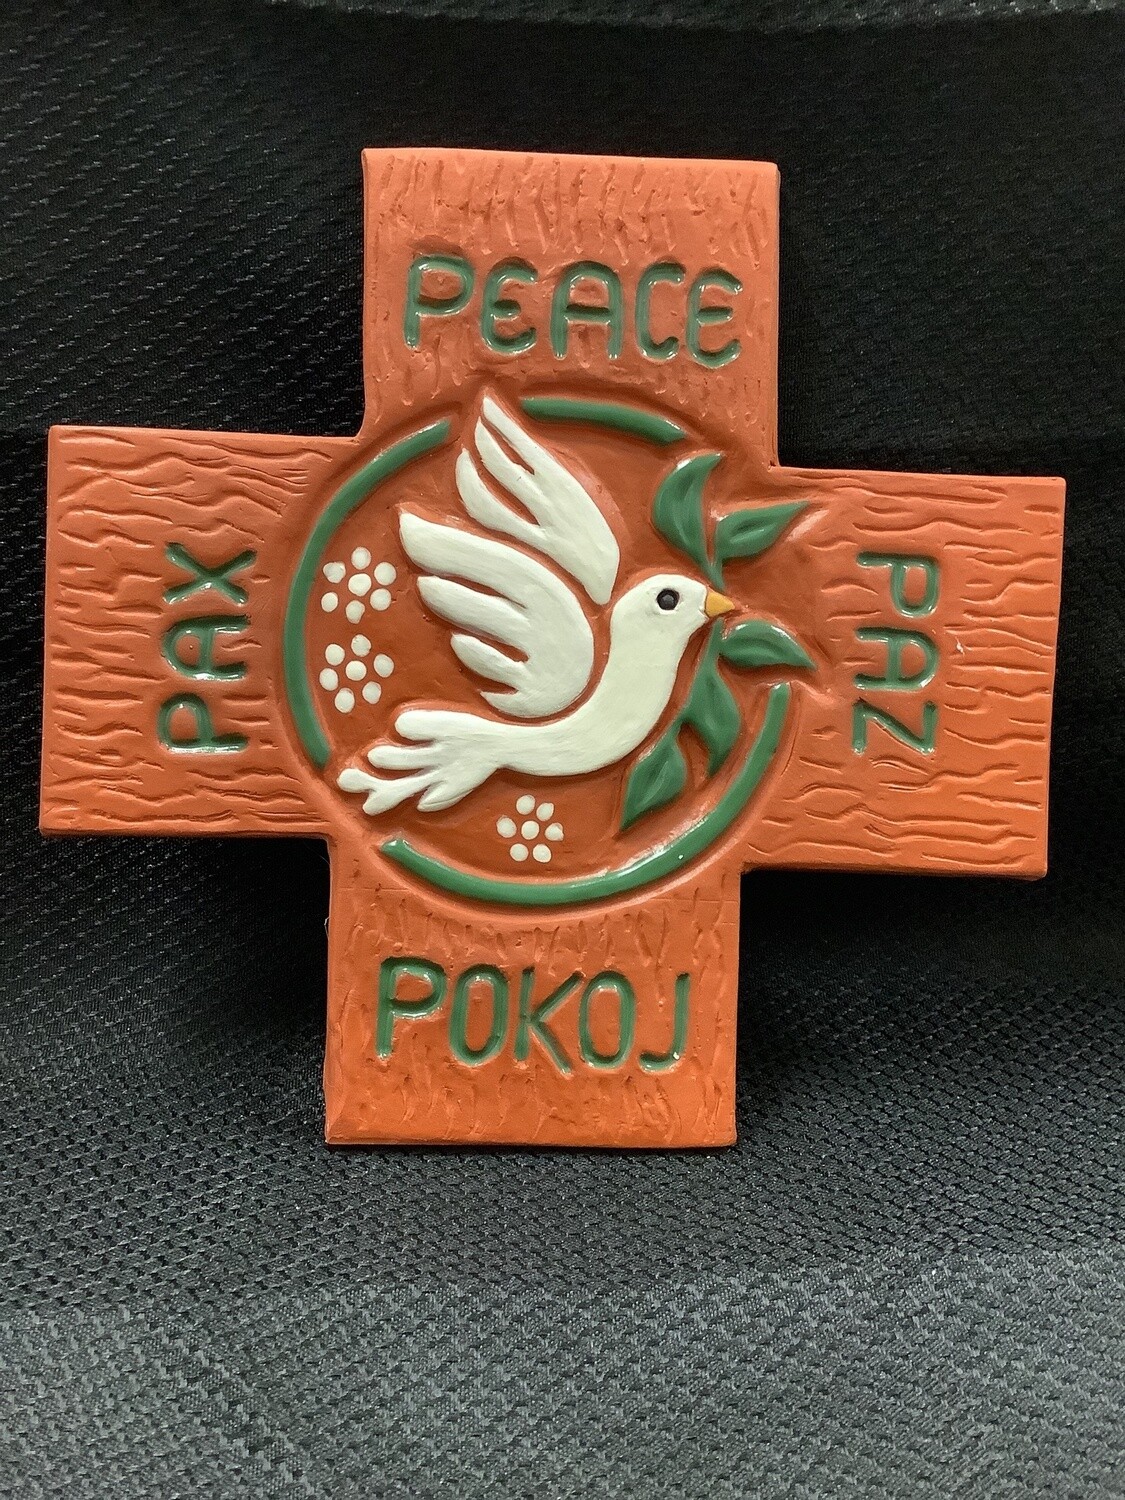 Peace Cross Paz Pokoj Pax